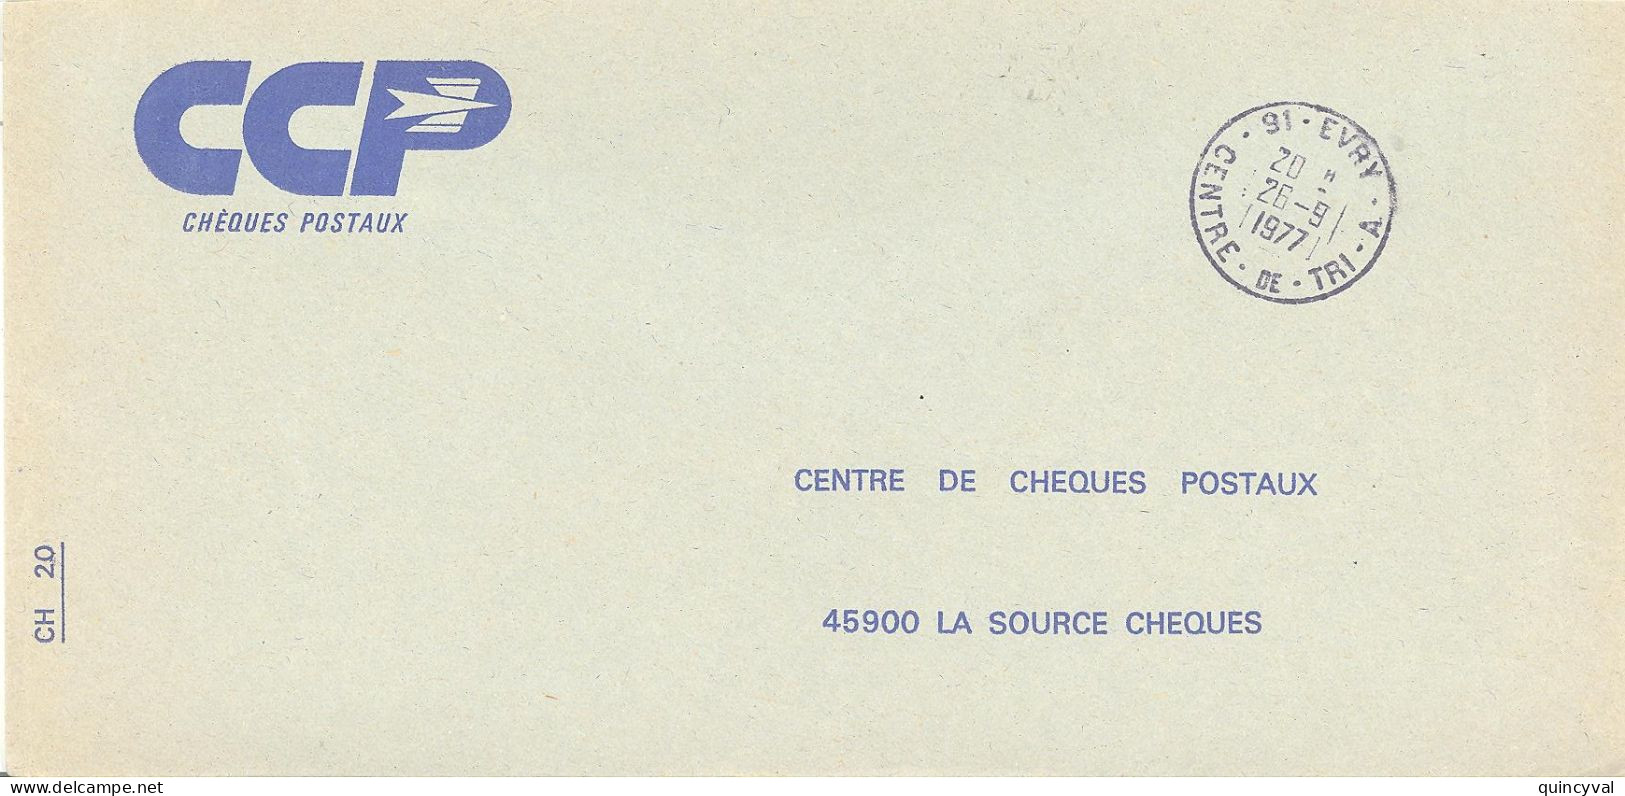 91 EVRY  CENTRE DE TRI  A   Lettre Enveloppe Des CCP Ob26 9 1977 - Bolli Manuali